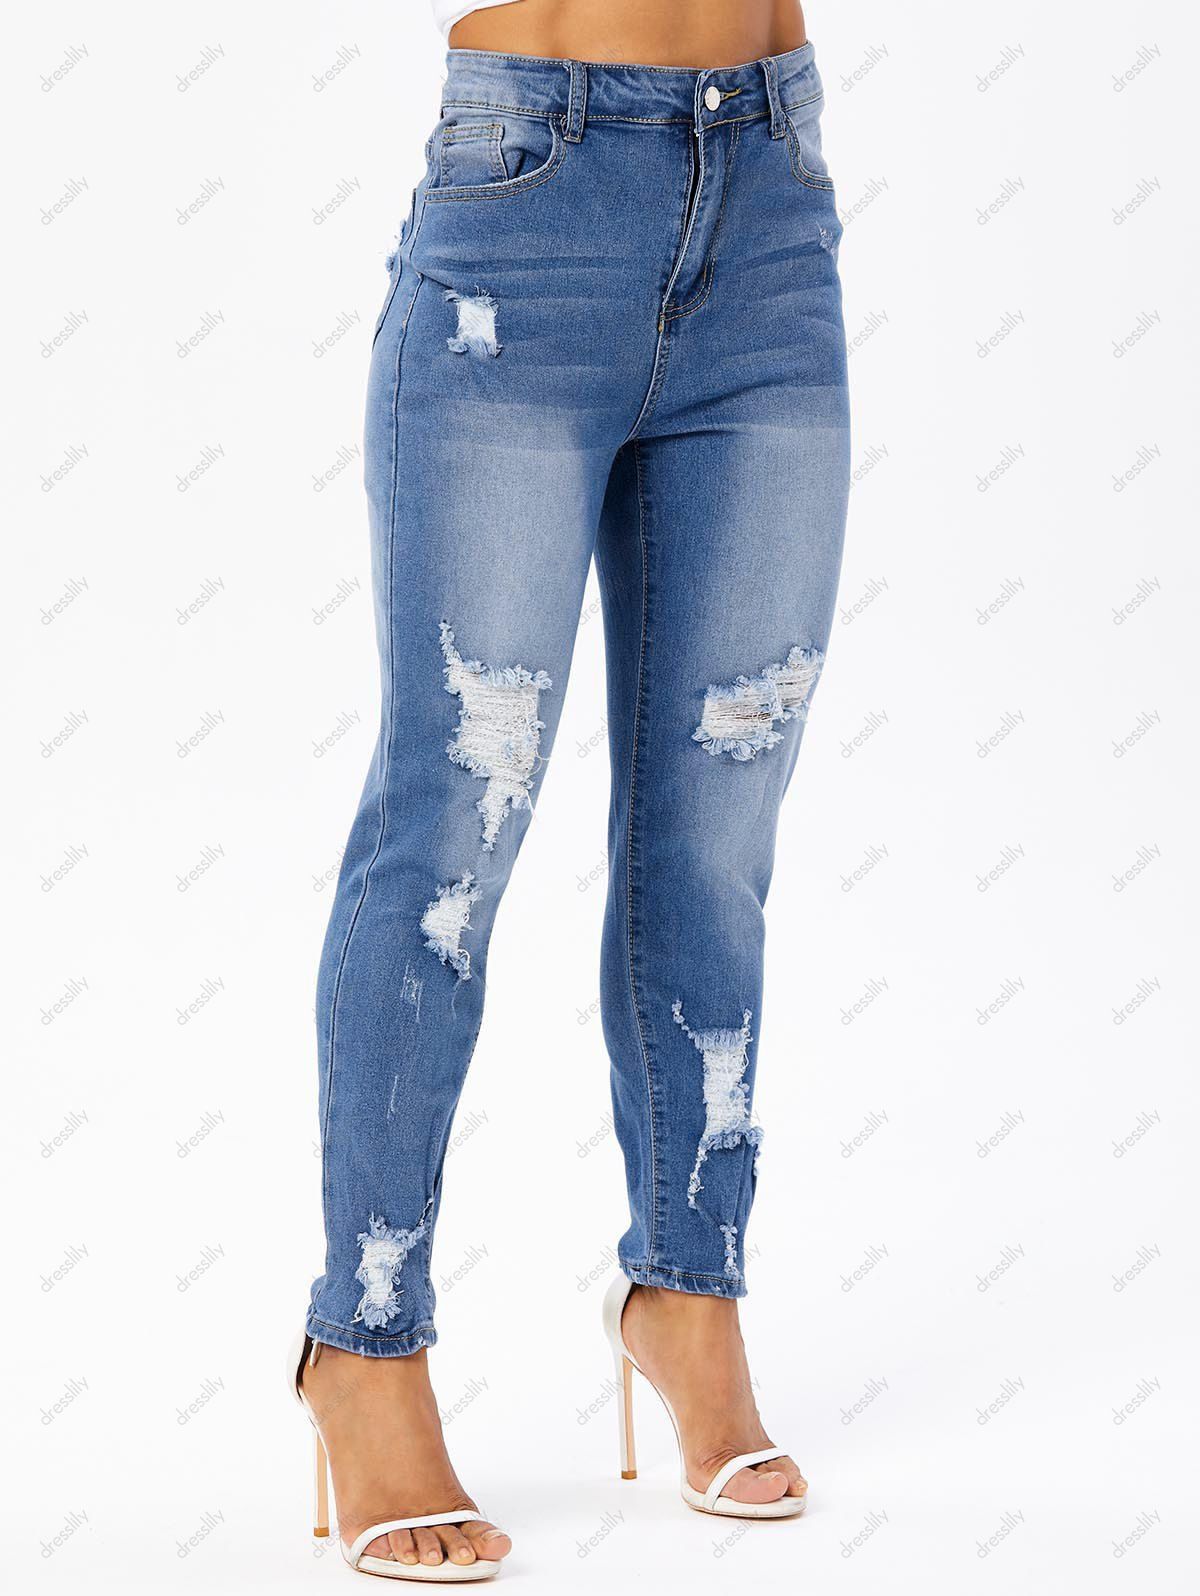 Ripped Jeans Pockets Zipper Fly Light Wash Long Skinny Denim Pants 